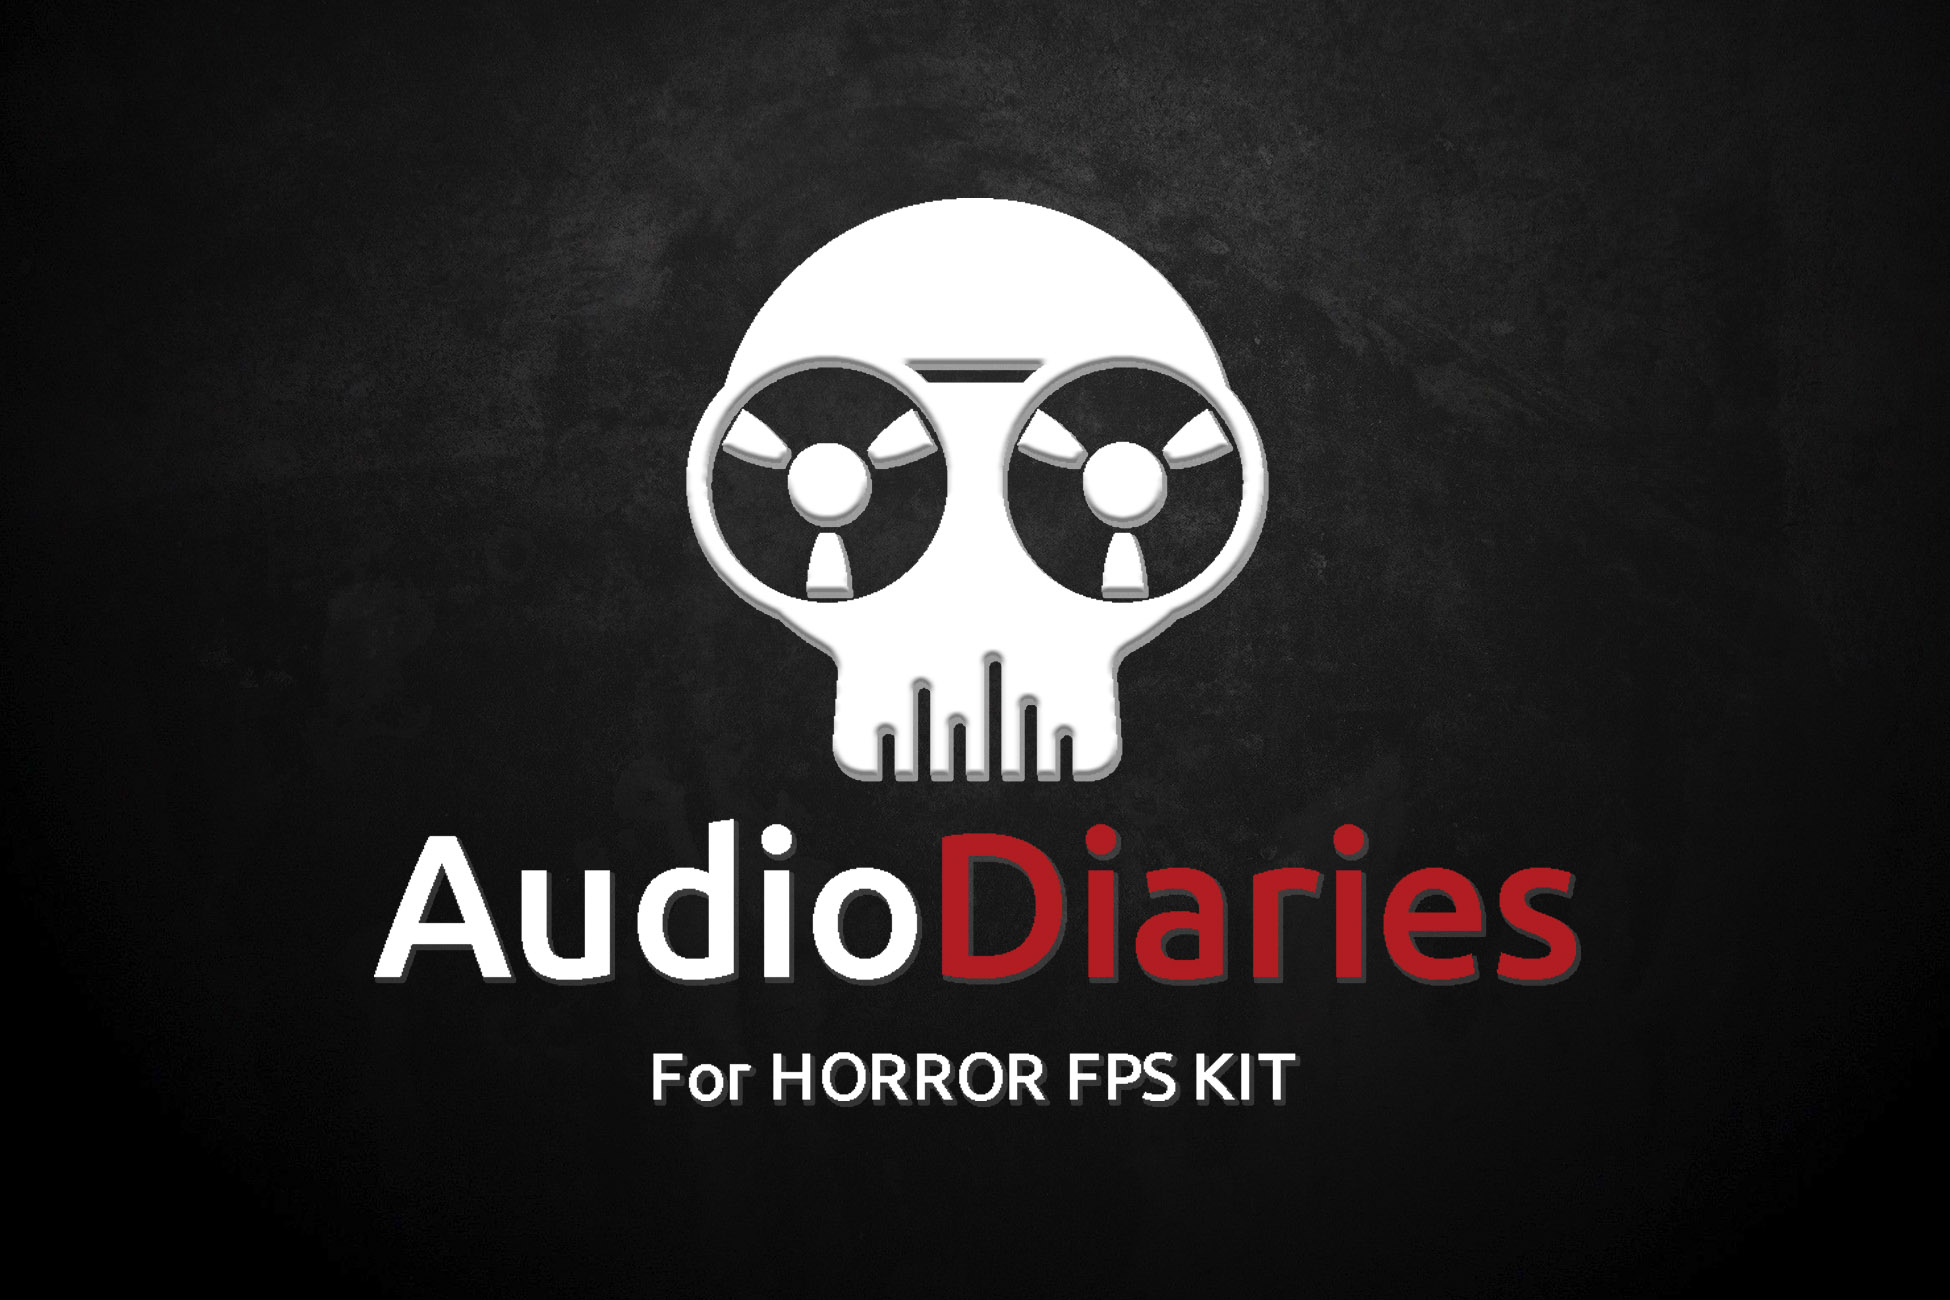 Audio Diaries v0.6.1 Release